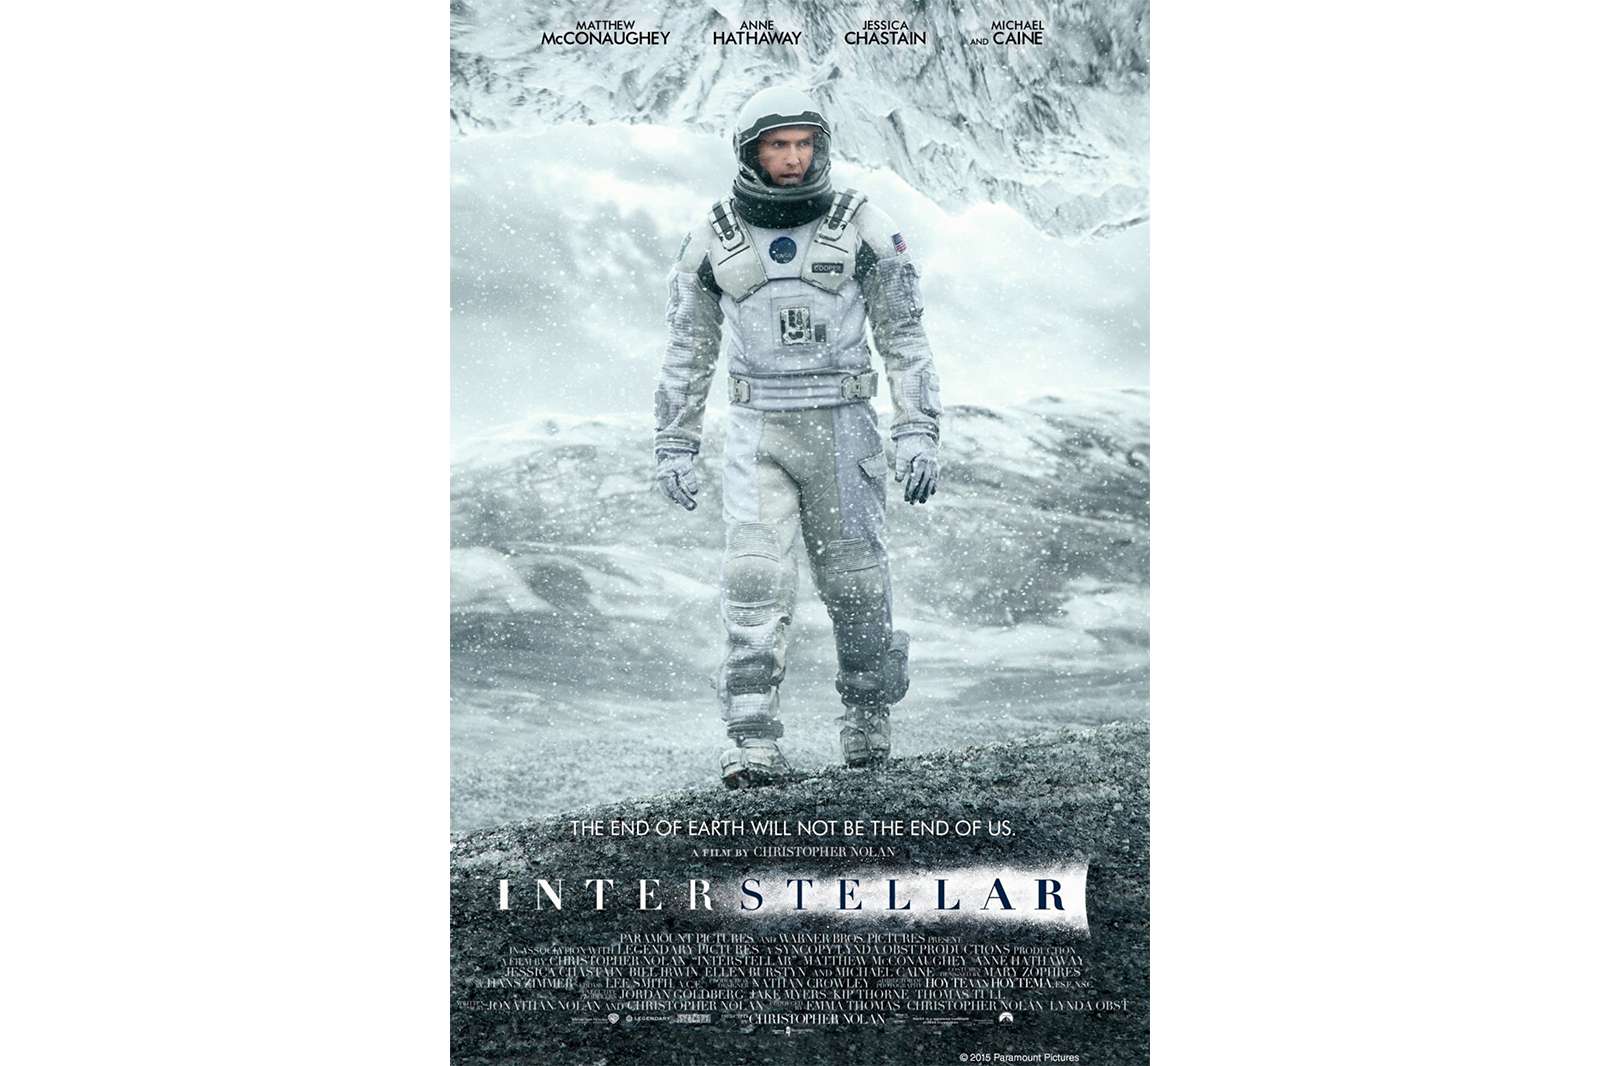 Interstellar, 2014. Directed by Christopher Nolan